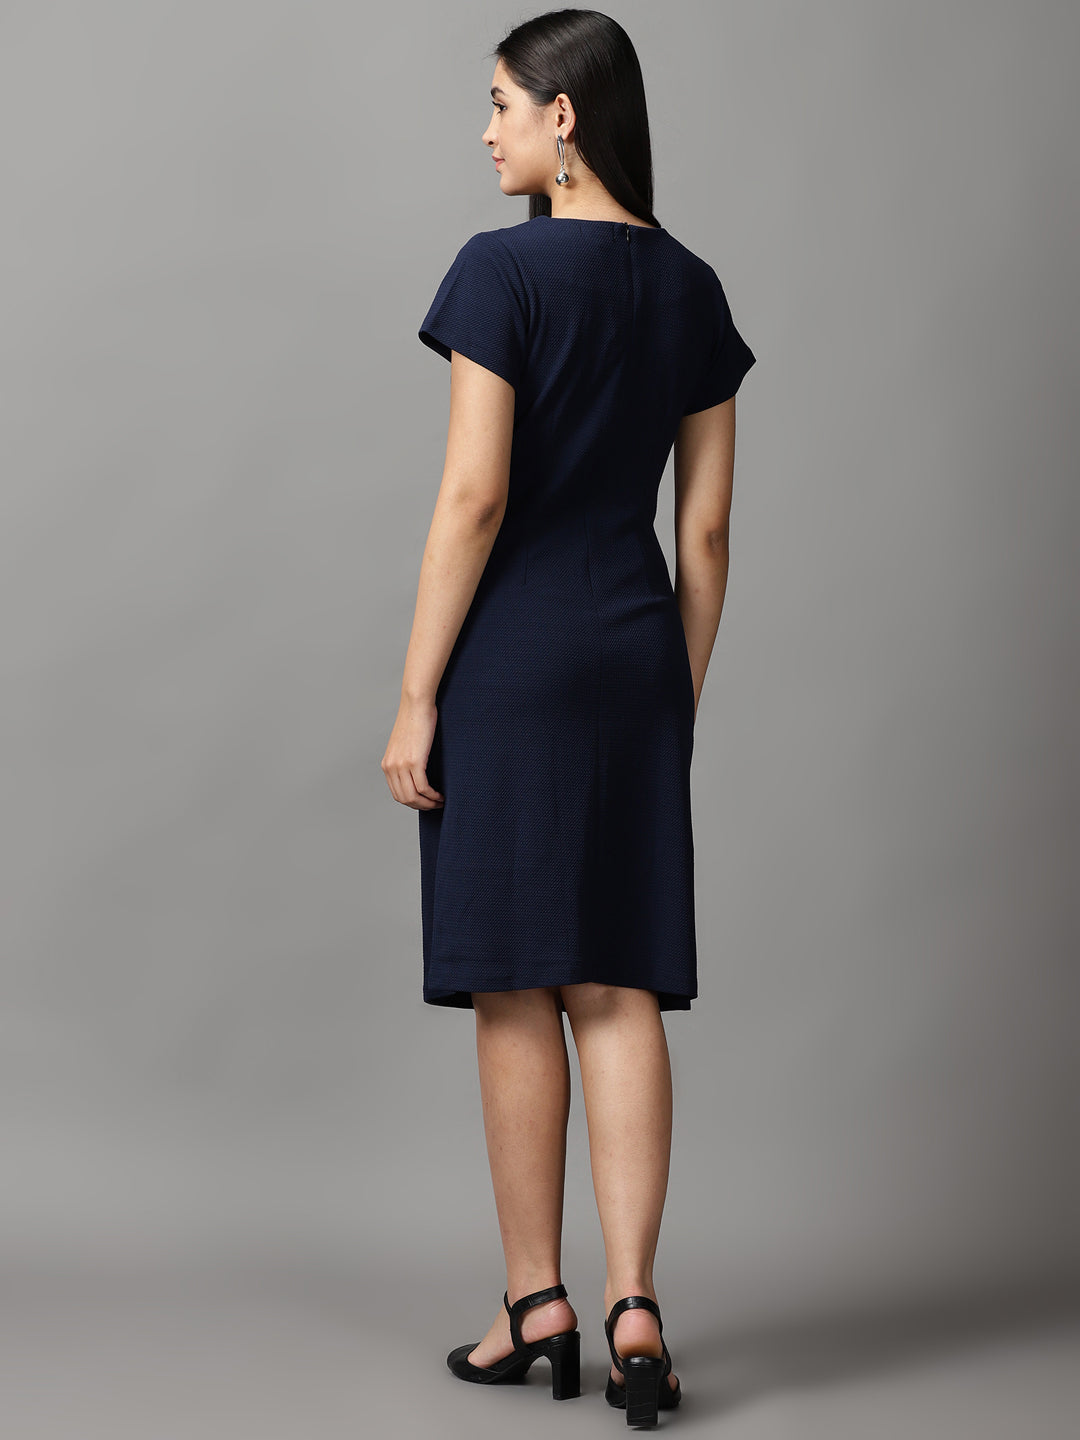 Women's Navy Blue Solid Bodycon Dress